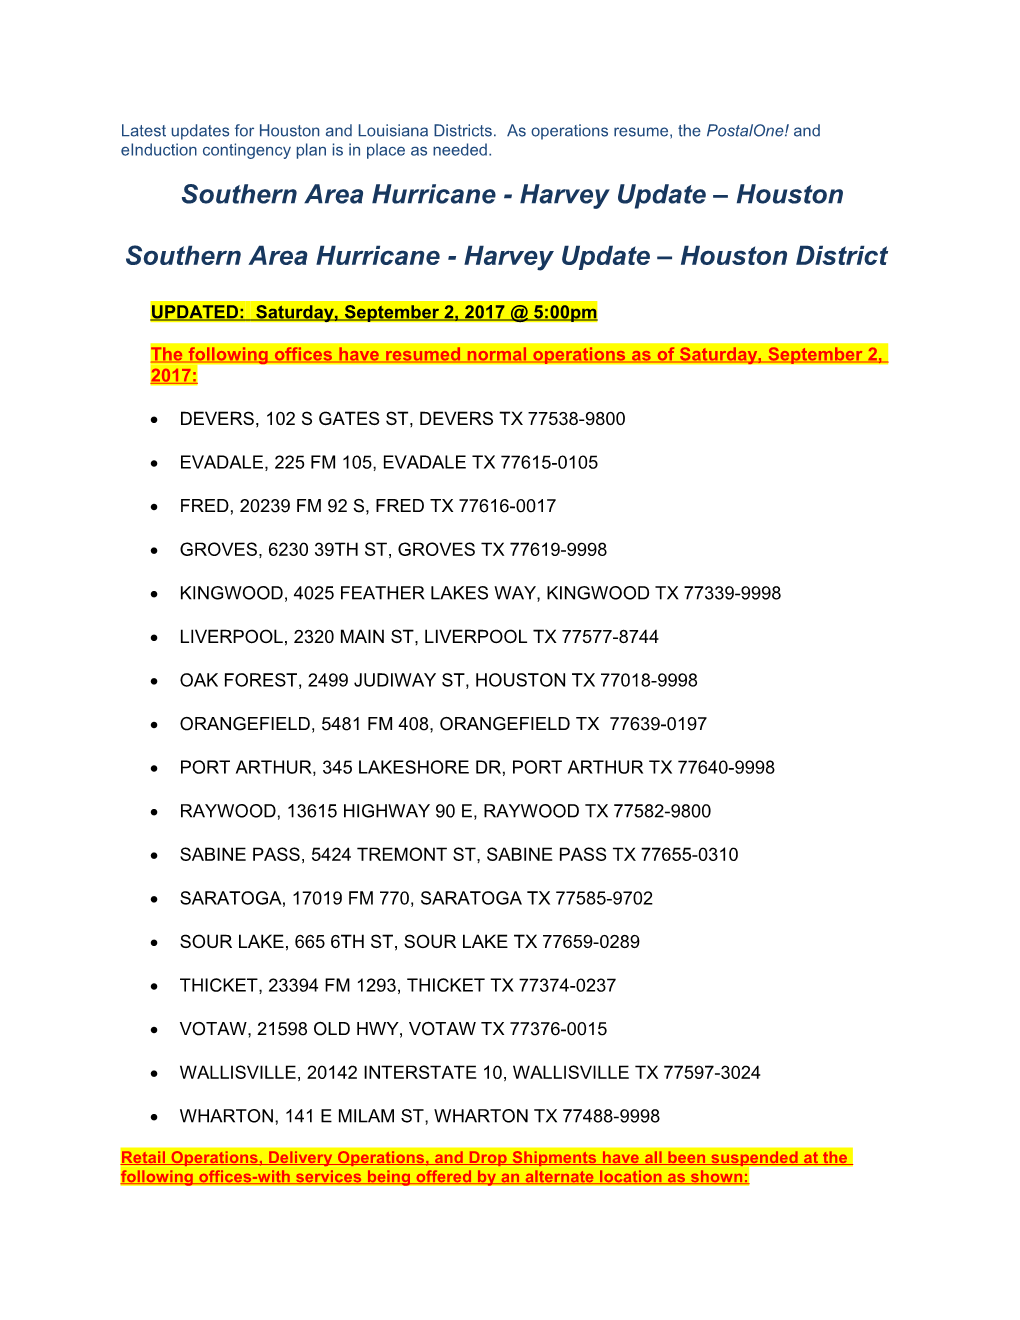 Southern Area Hurricane - Harvey Update Houston